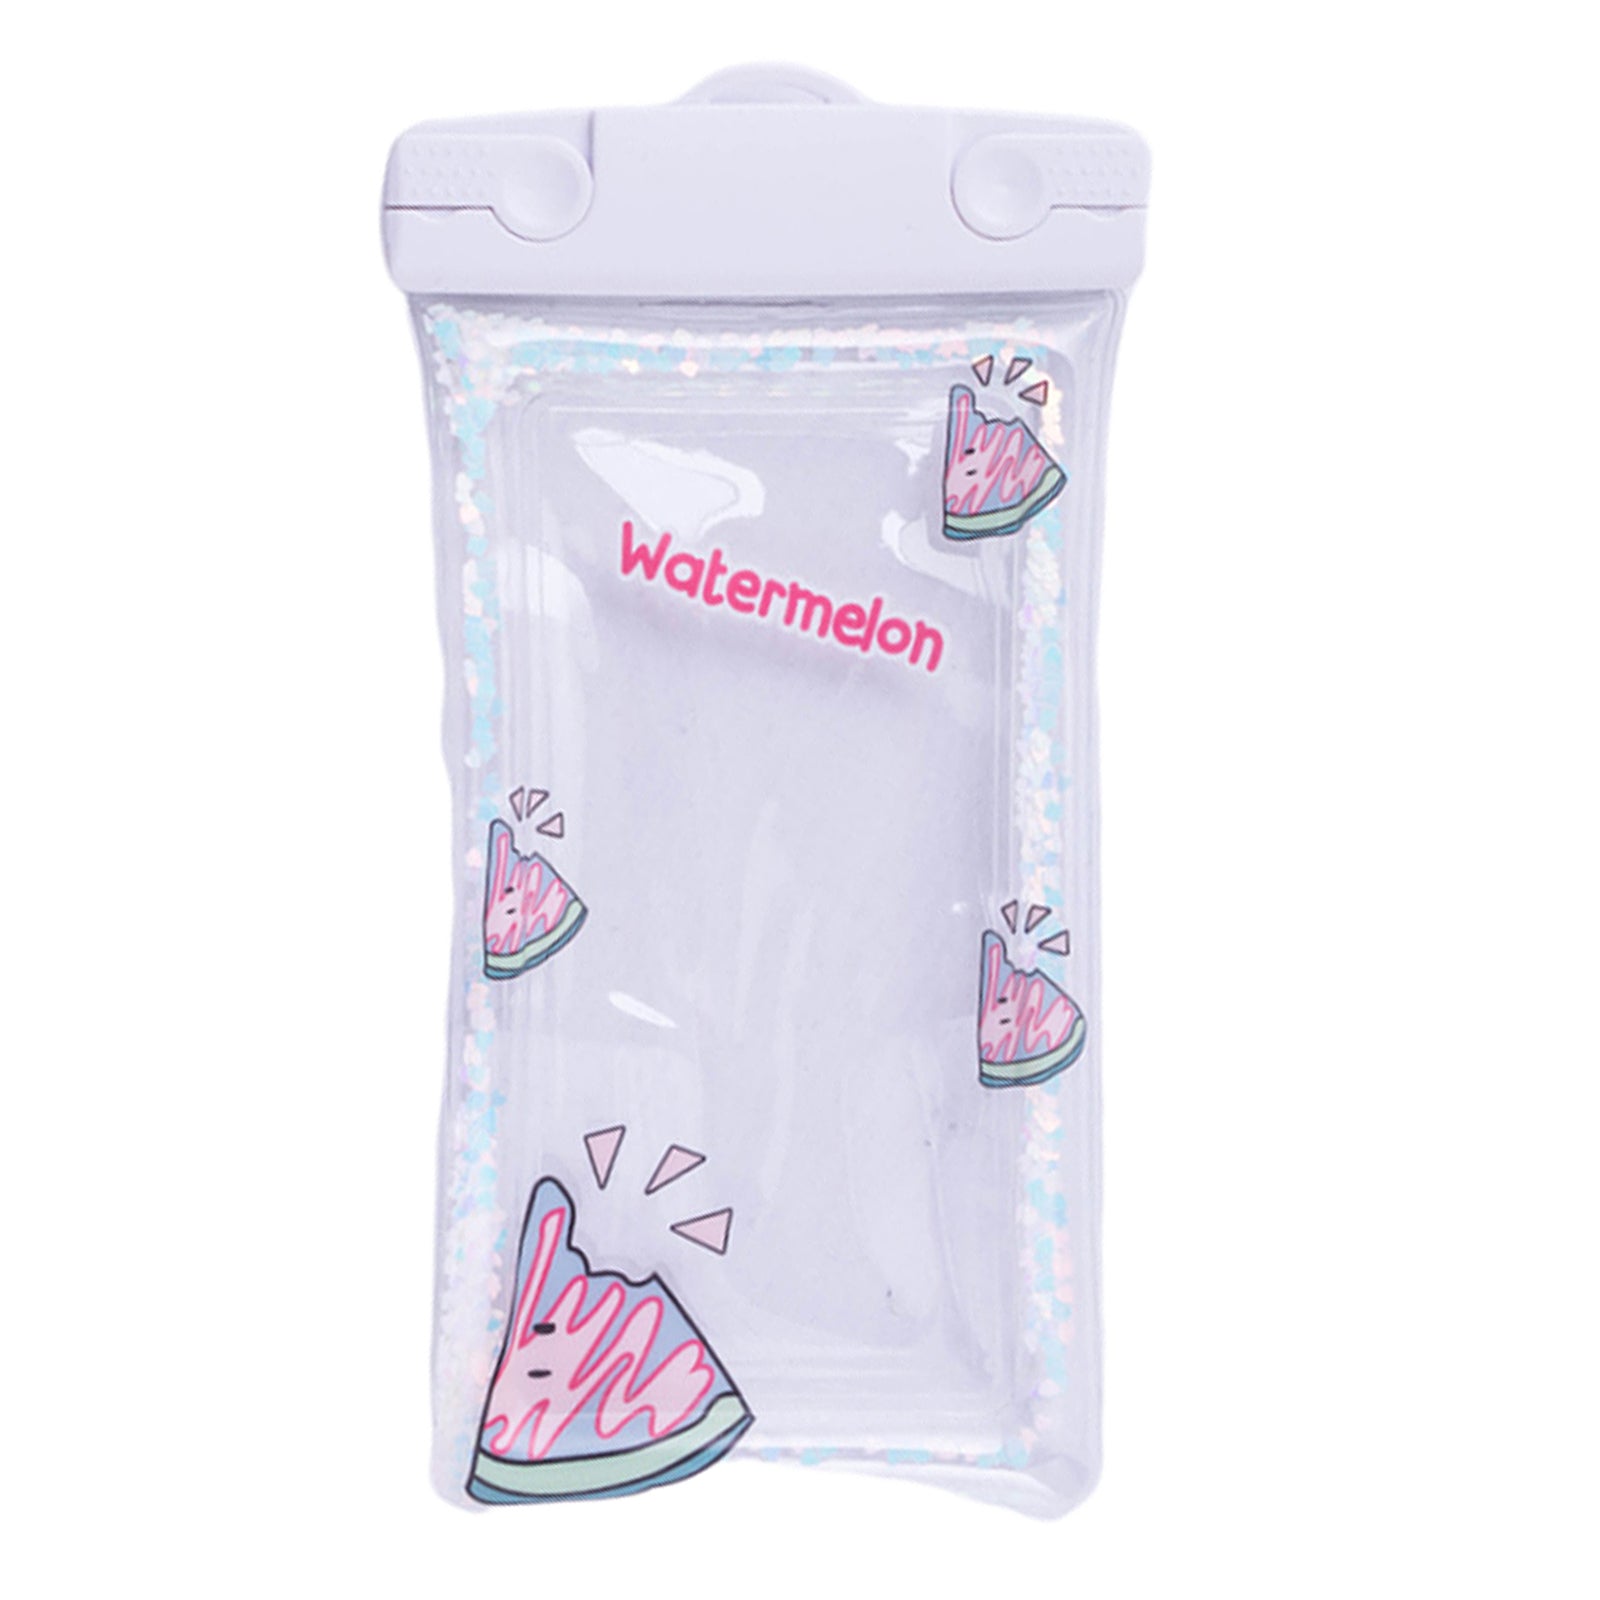 PVC Waterproof Phone Case Cellphone Dry Bag Phones Holder Watermelon Debris